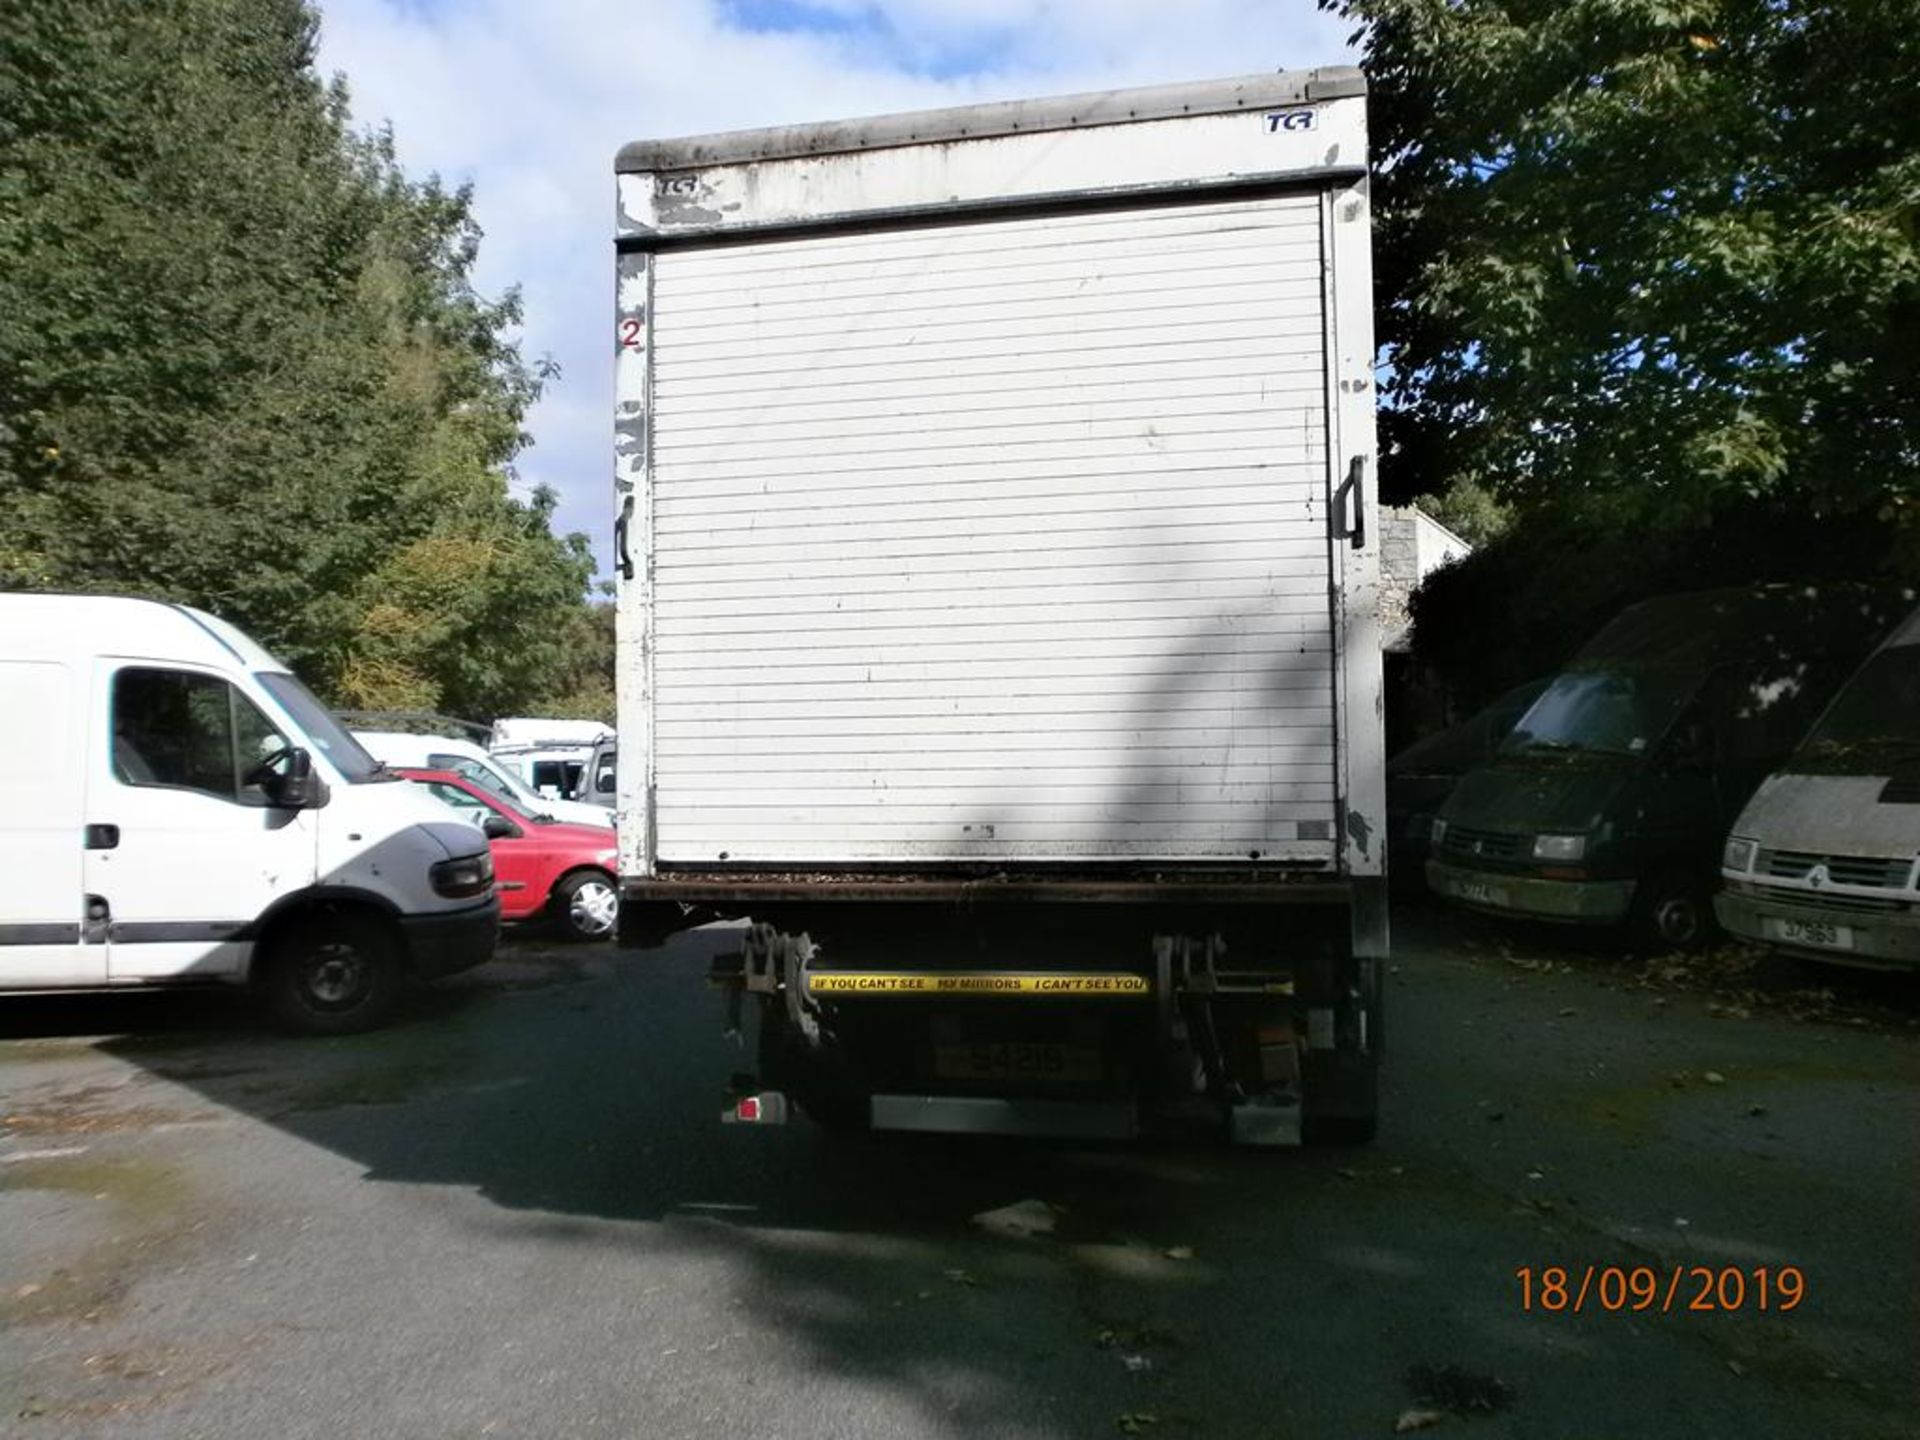 DAF LF 45.150 7.5T Box Lorry - Image 3 of 5